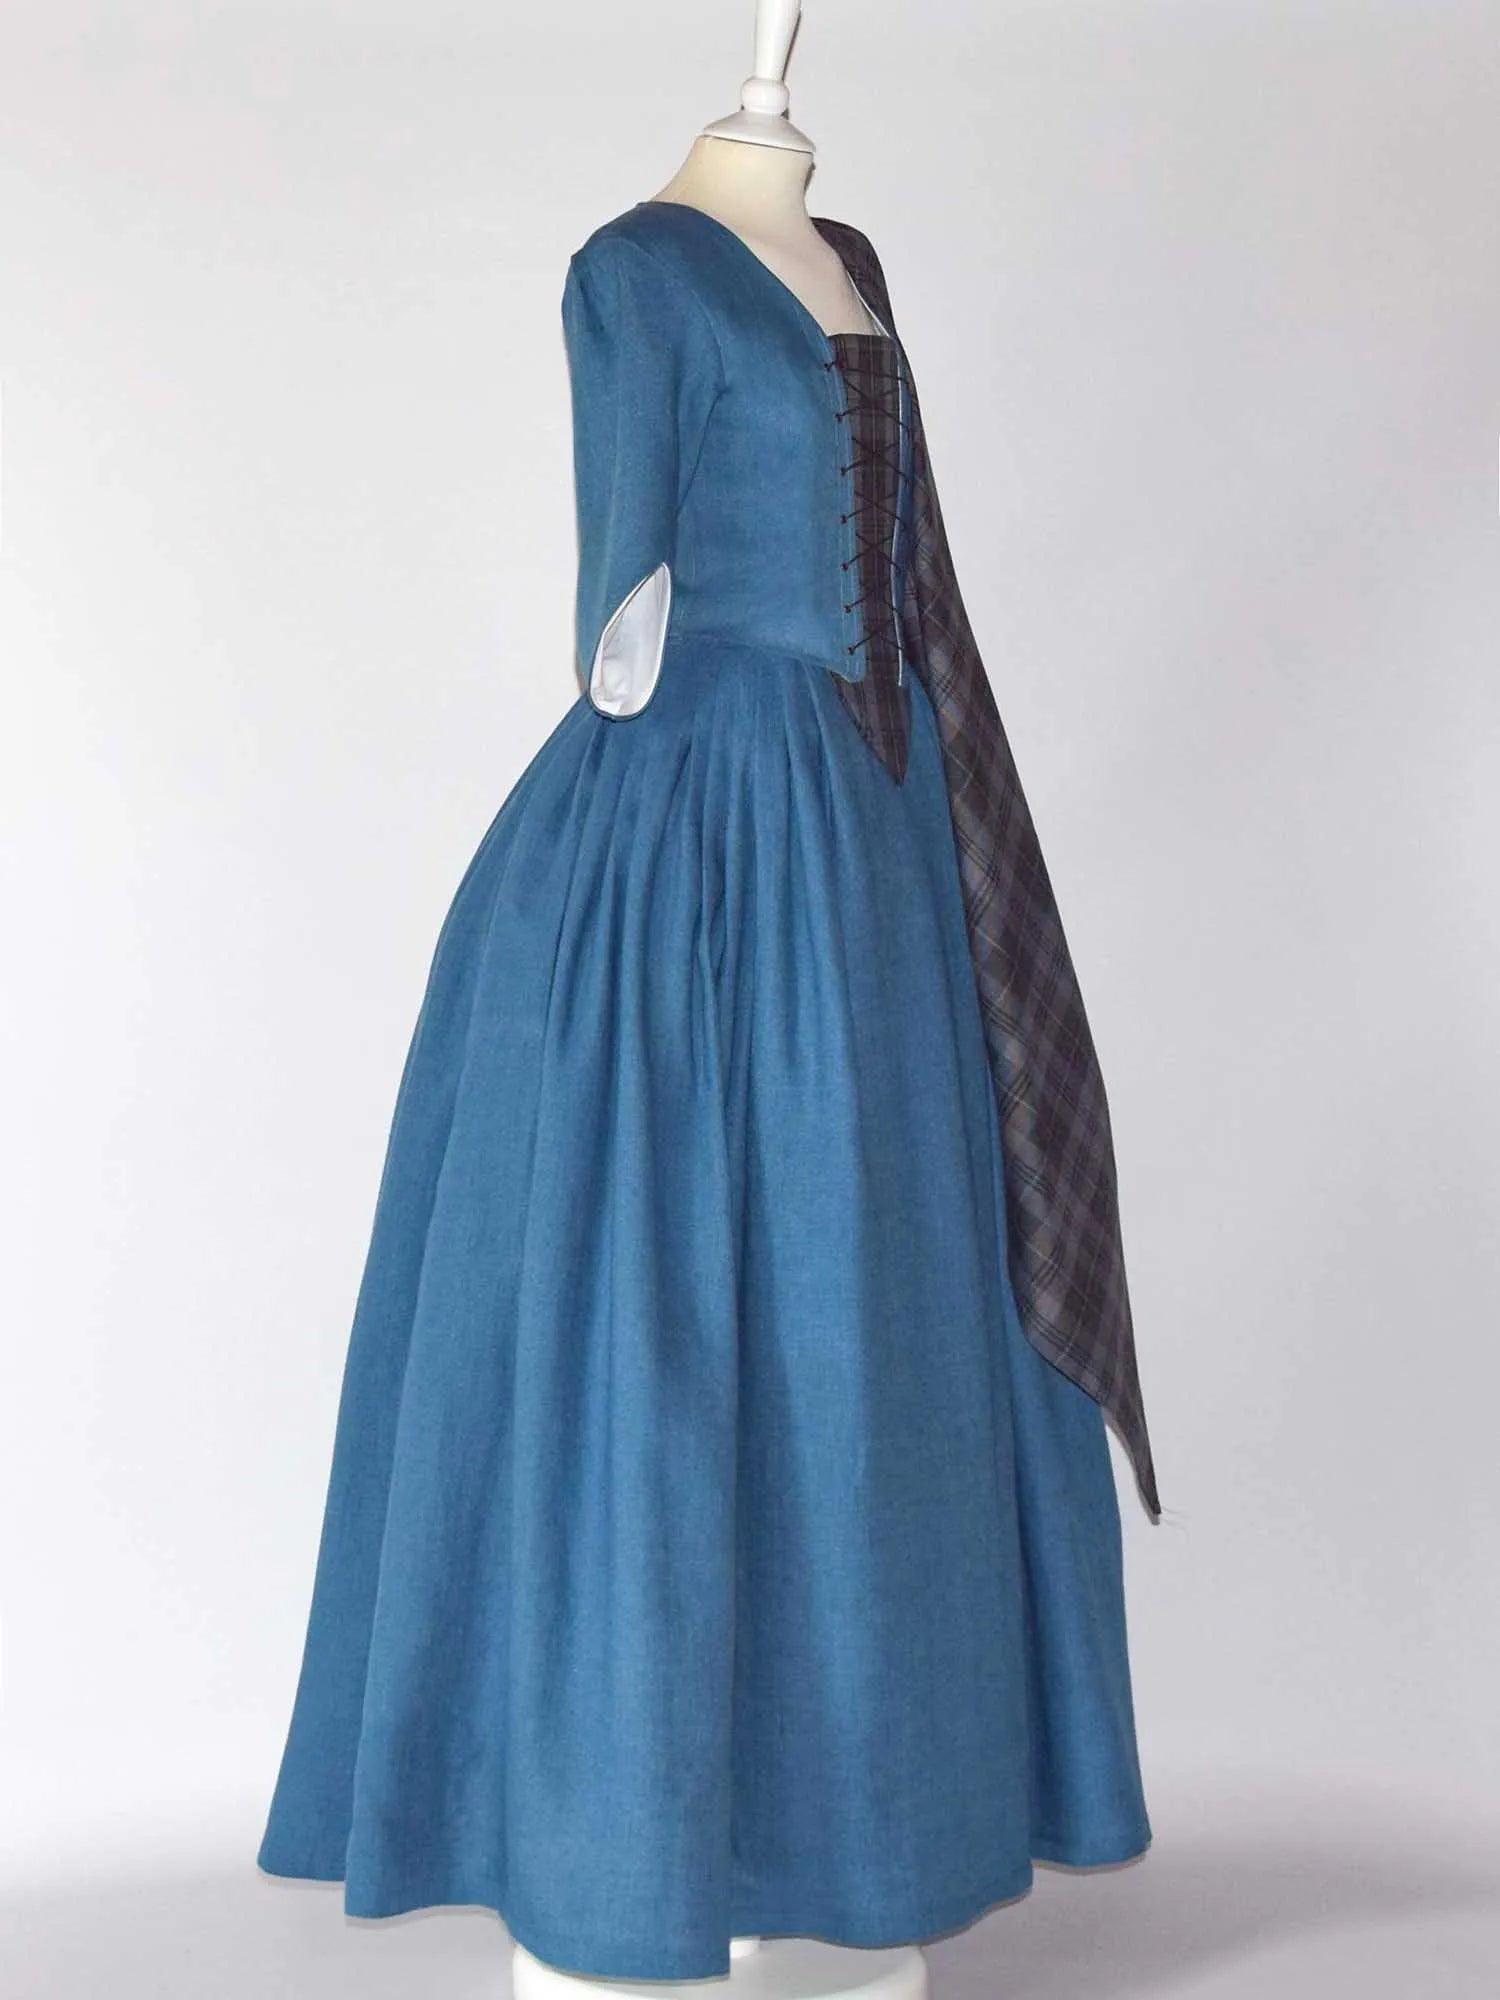 Historical Costume in Steel Blue Linen &amp; Silver Granite Tartan - Atelier Serraspina